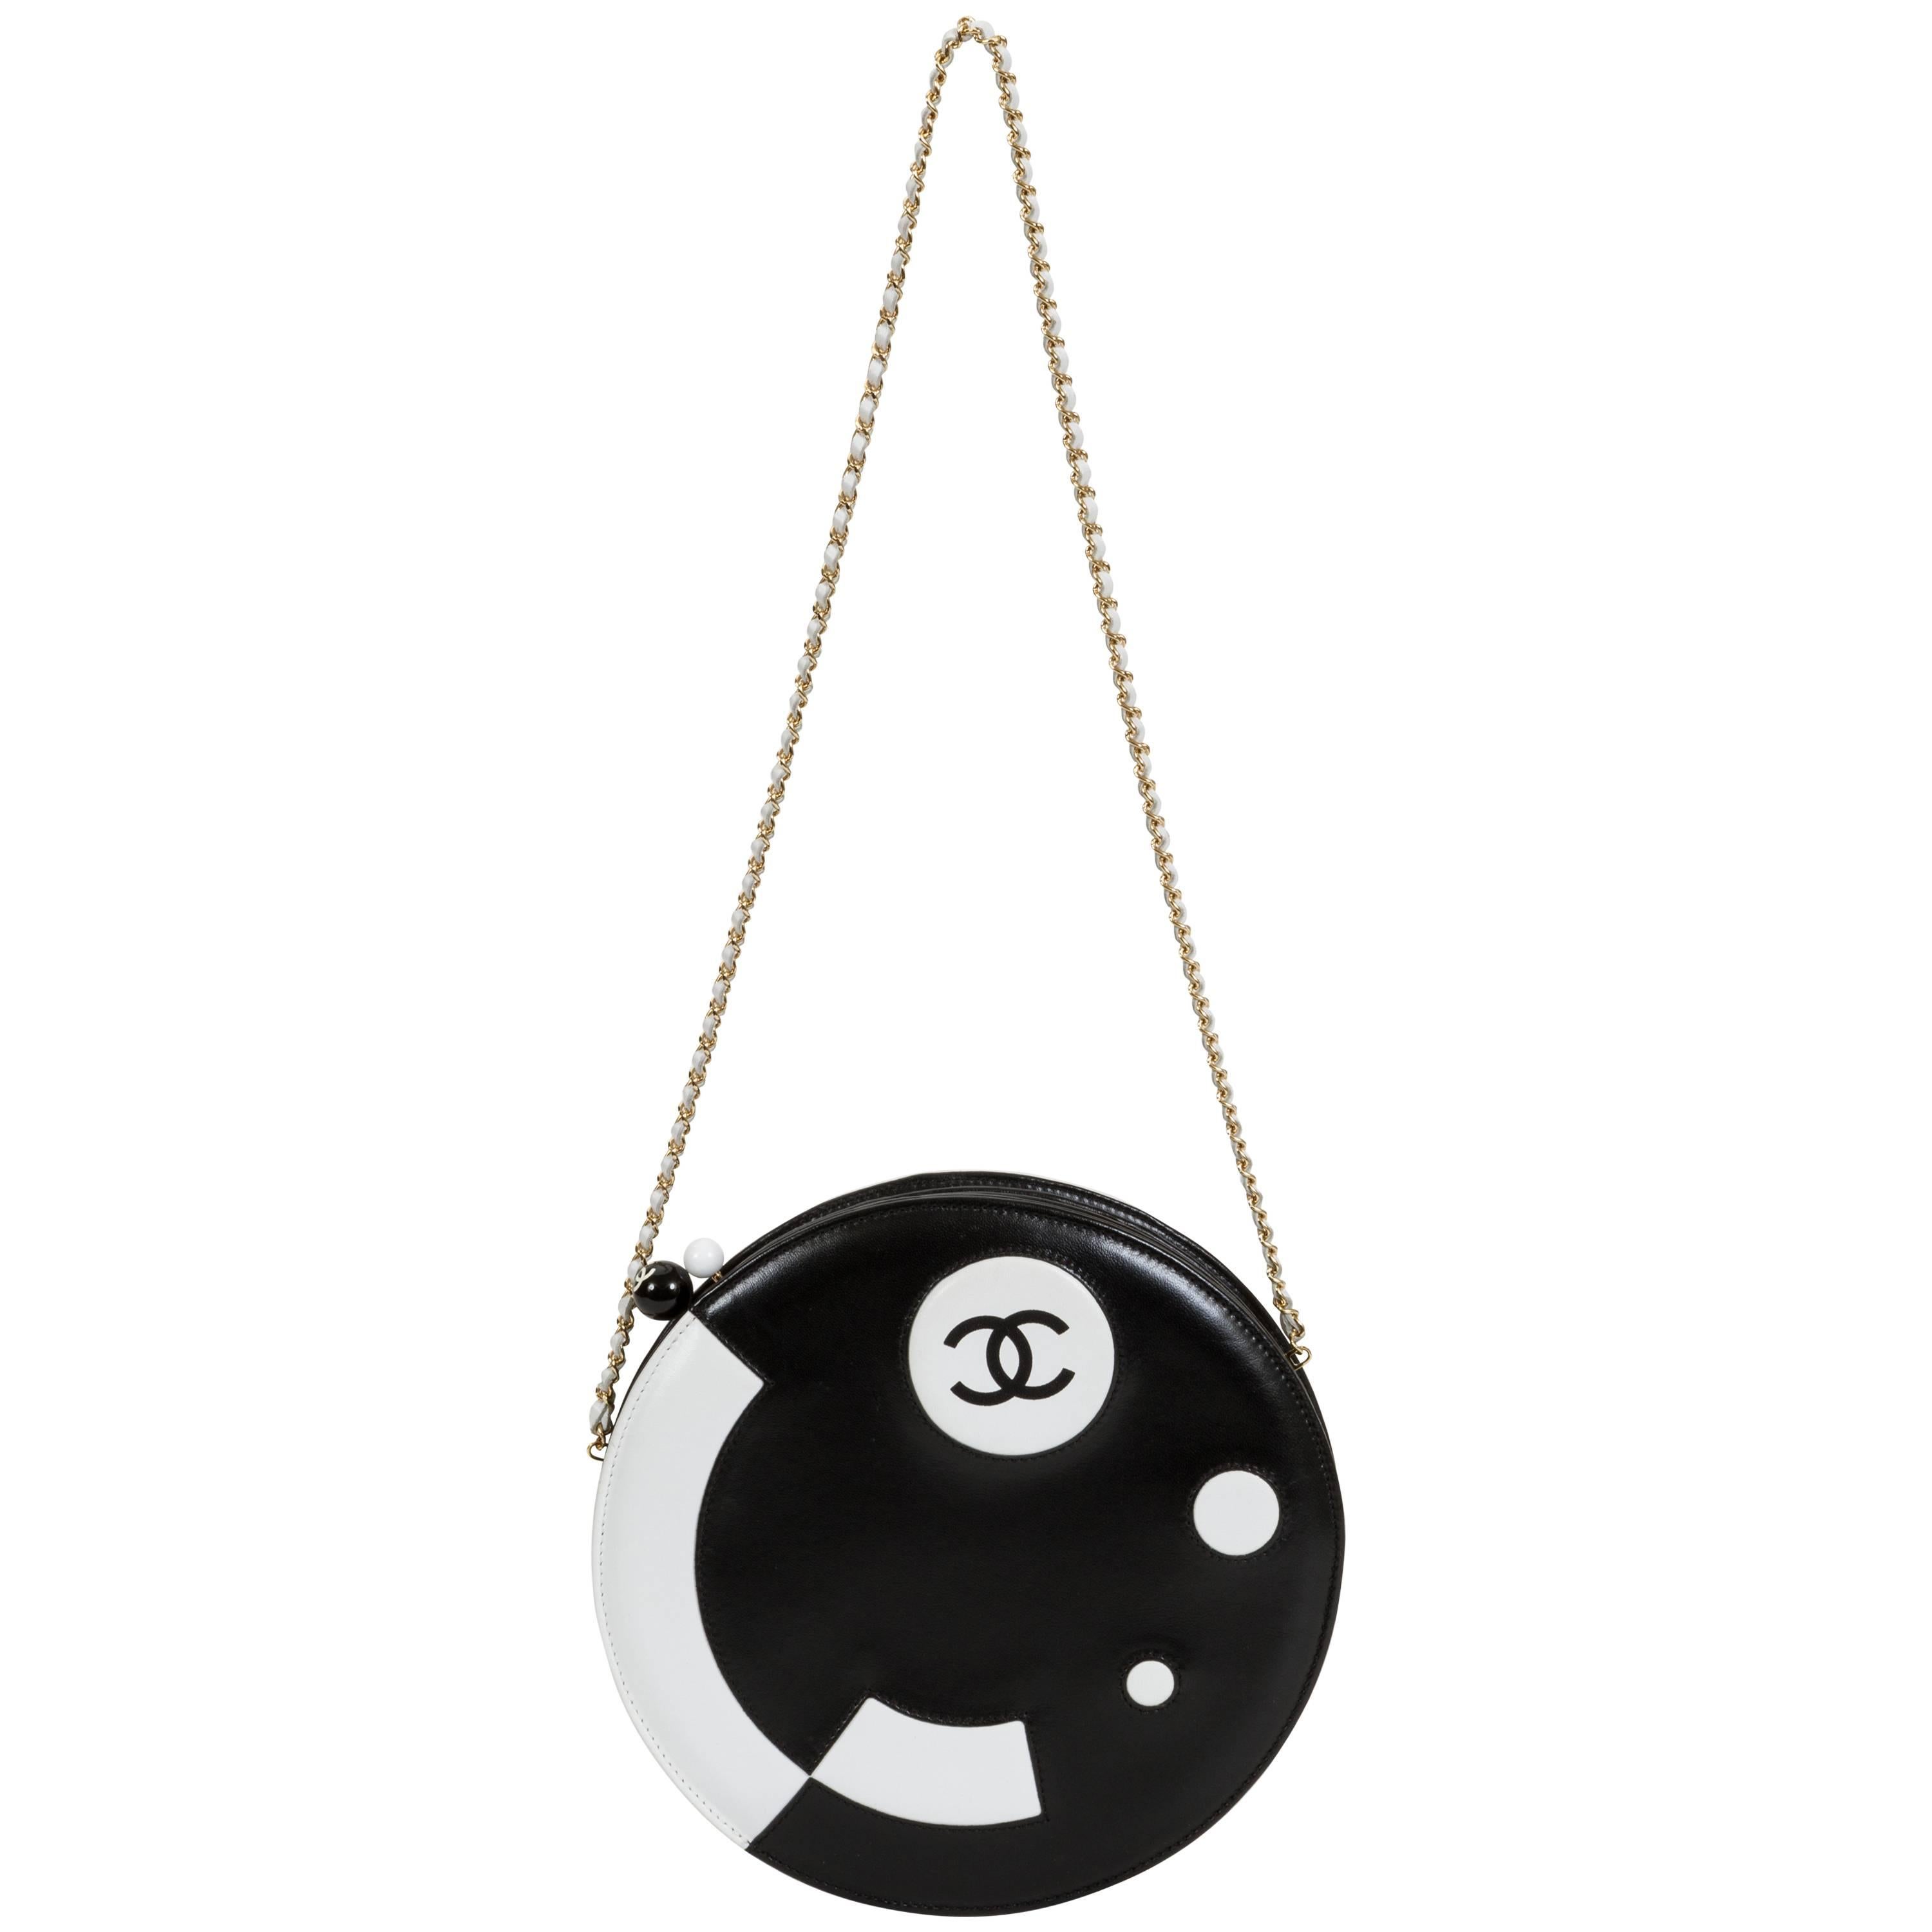 Chanel Black and White Rare Round Chain Bag